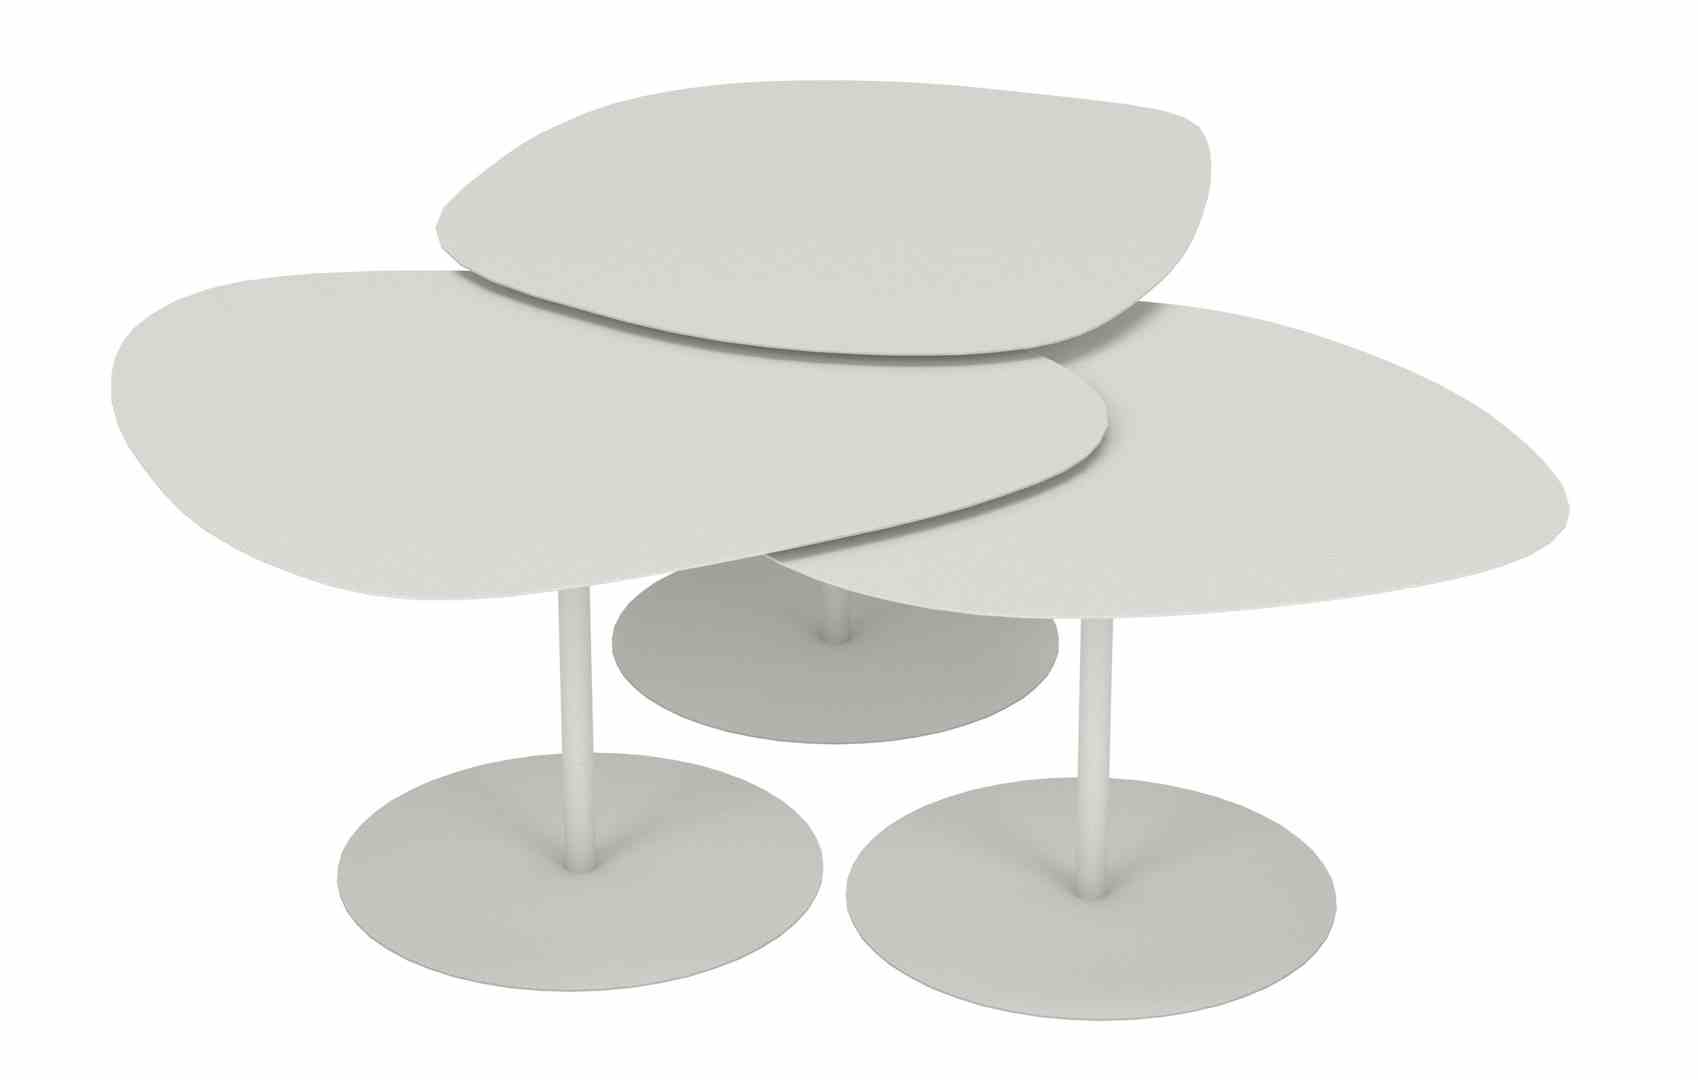 Matiere grise luc jozancy galet tables gigognes metal 001 blanc 001 blanc 001 blanc copy